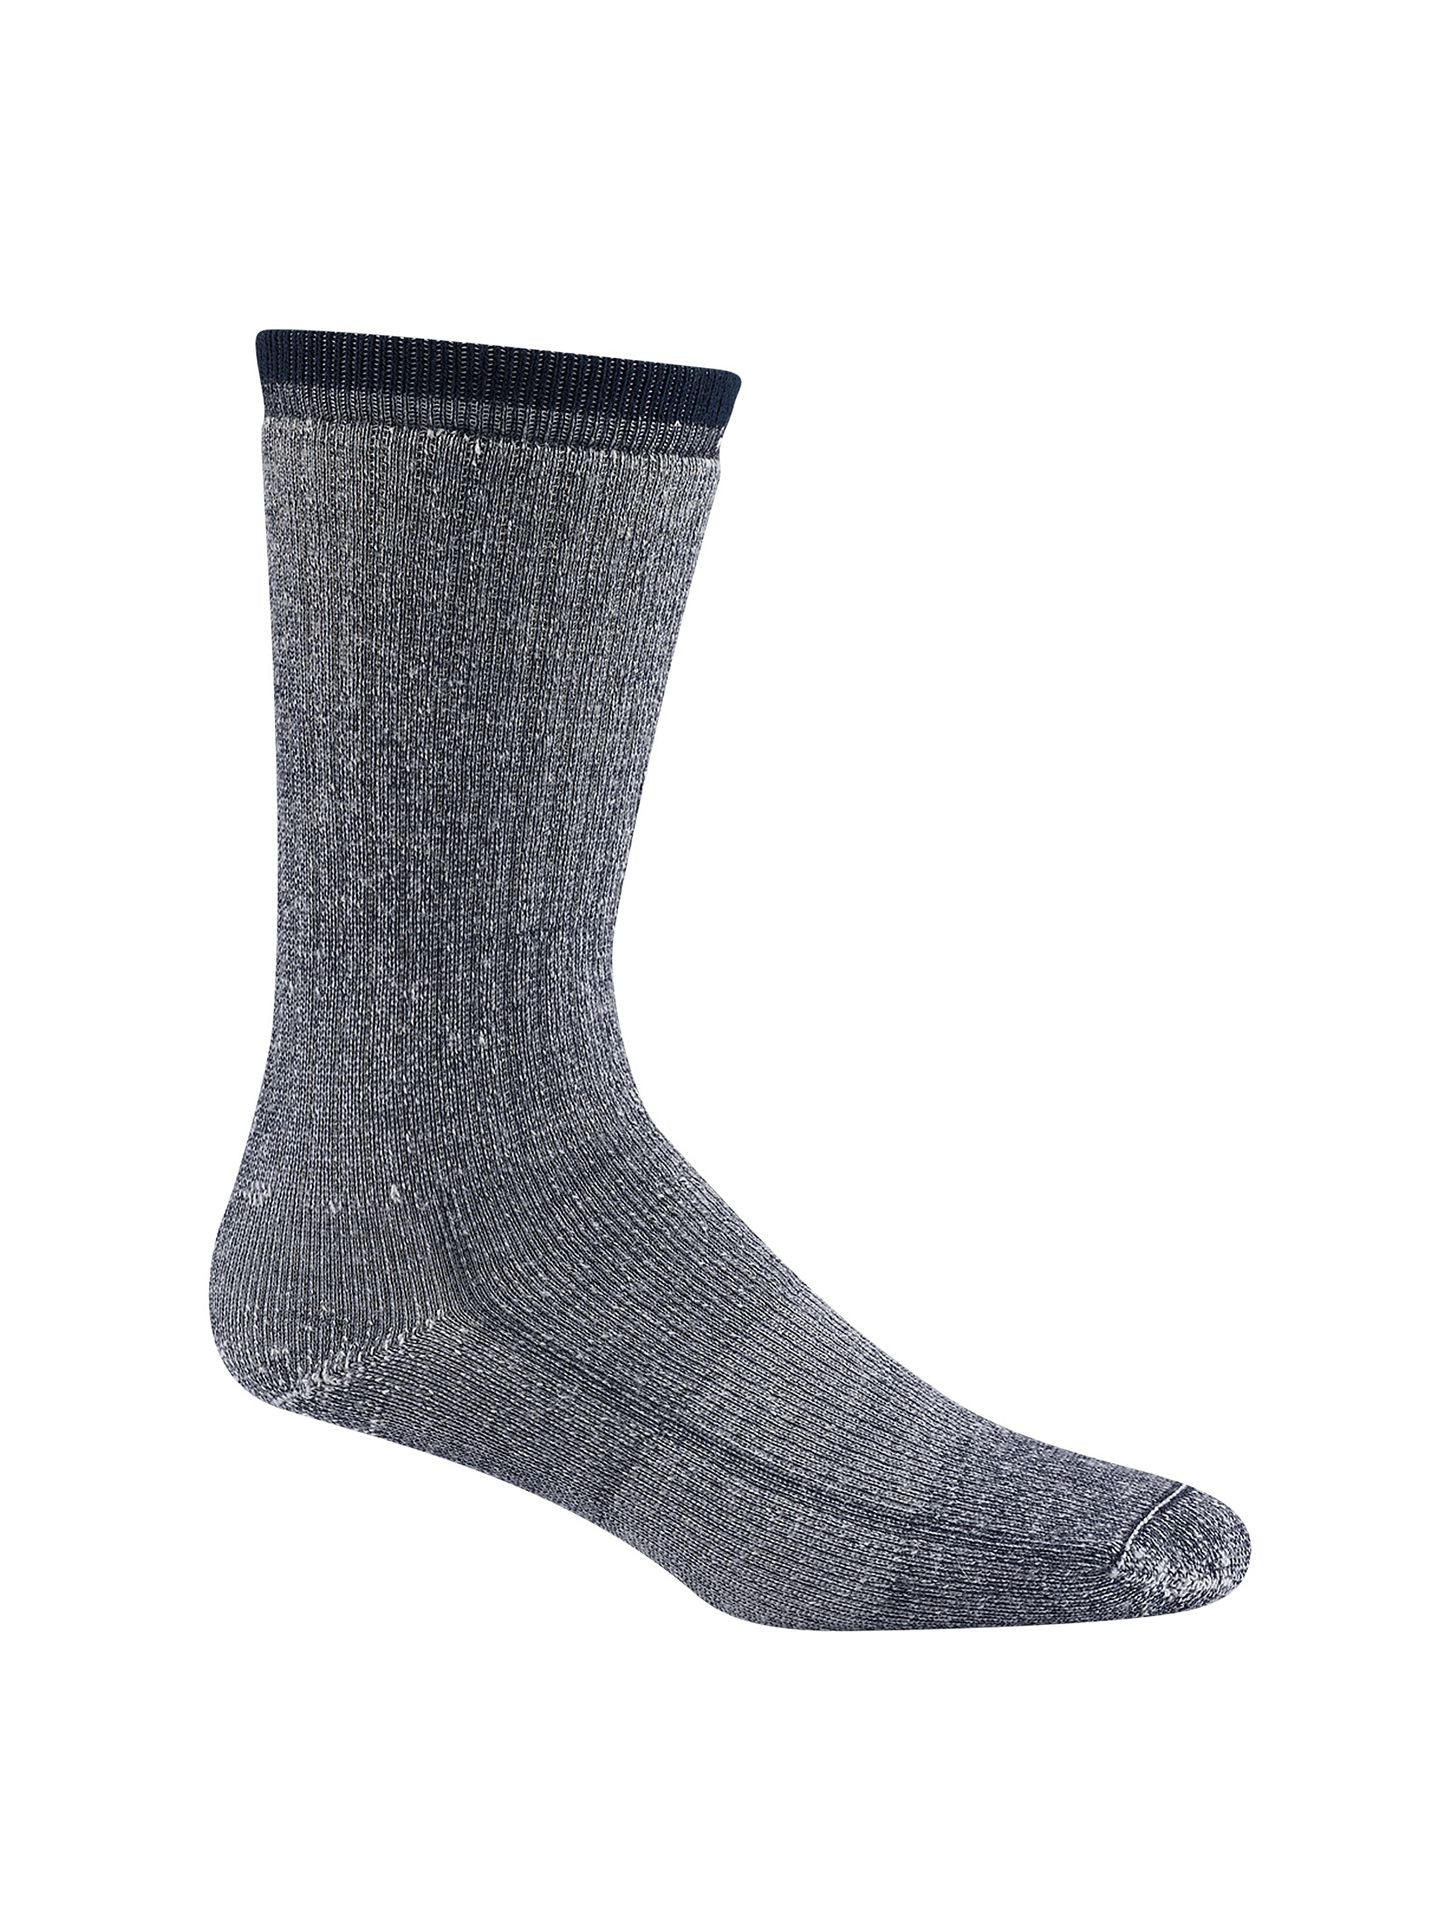 Merino Wool Comfort Hiker Crew Socks